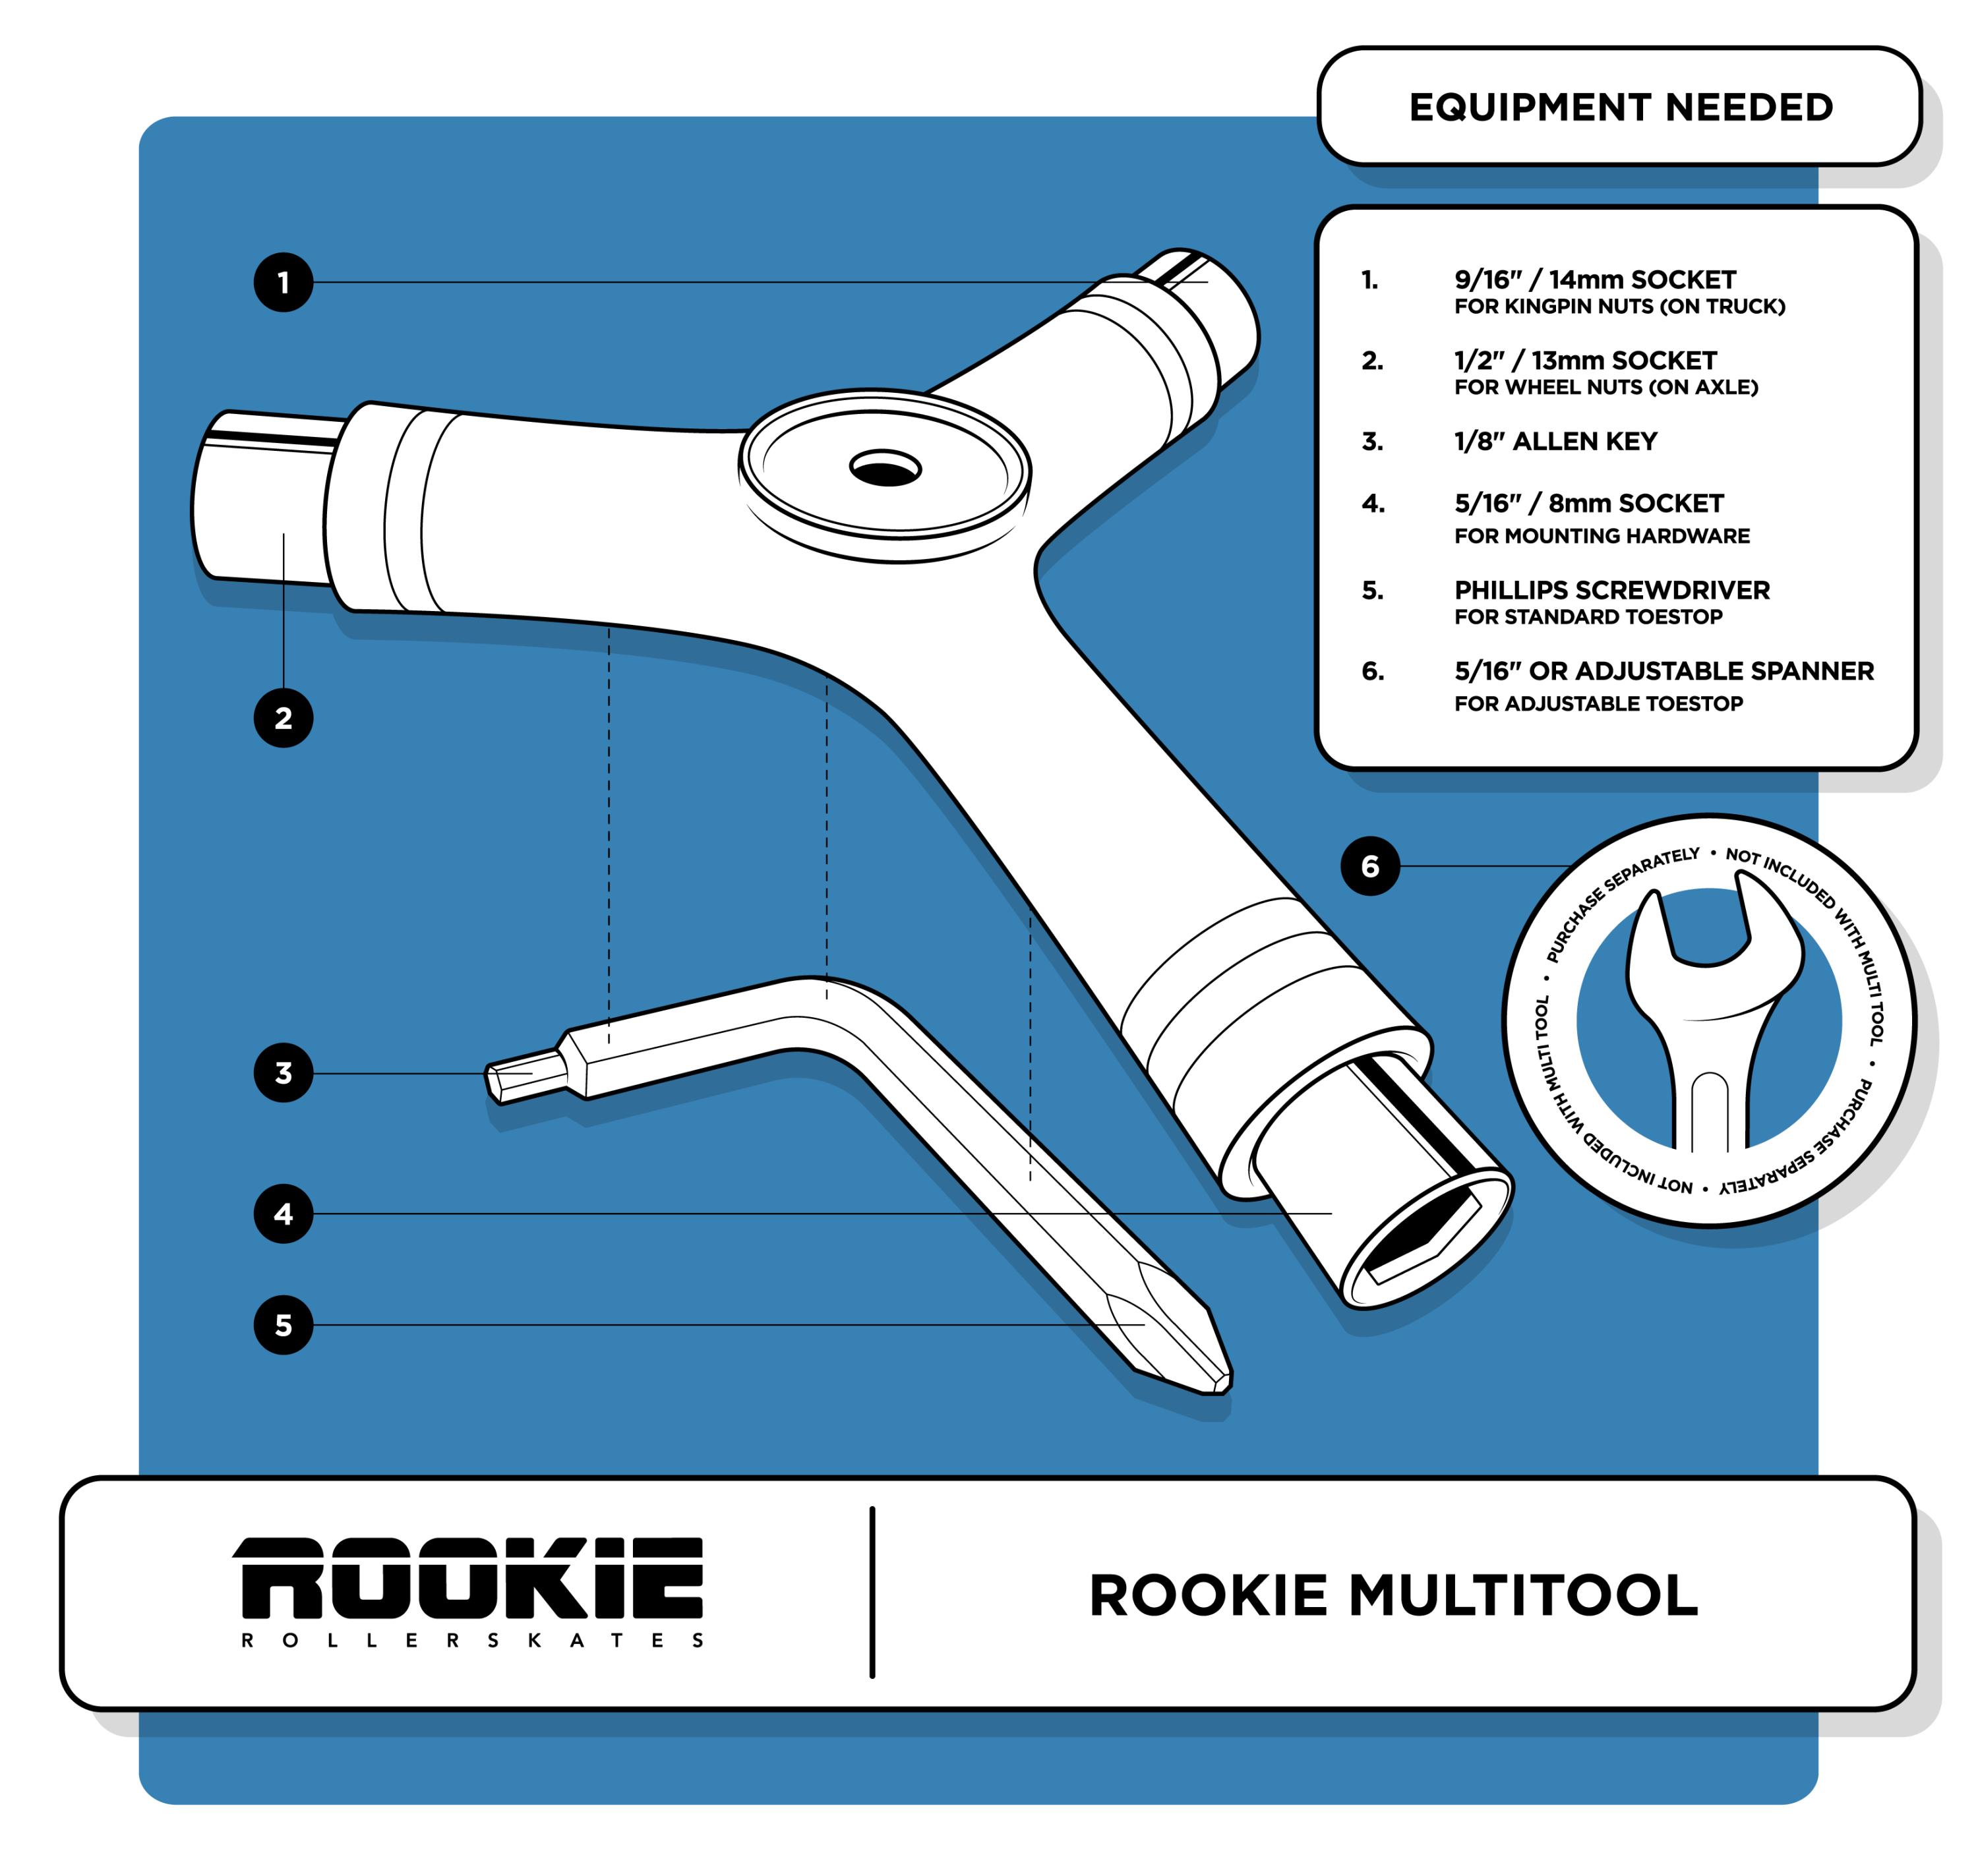 Rookie Equipment needed infographic